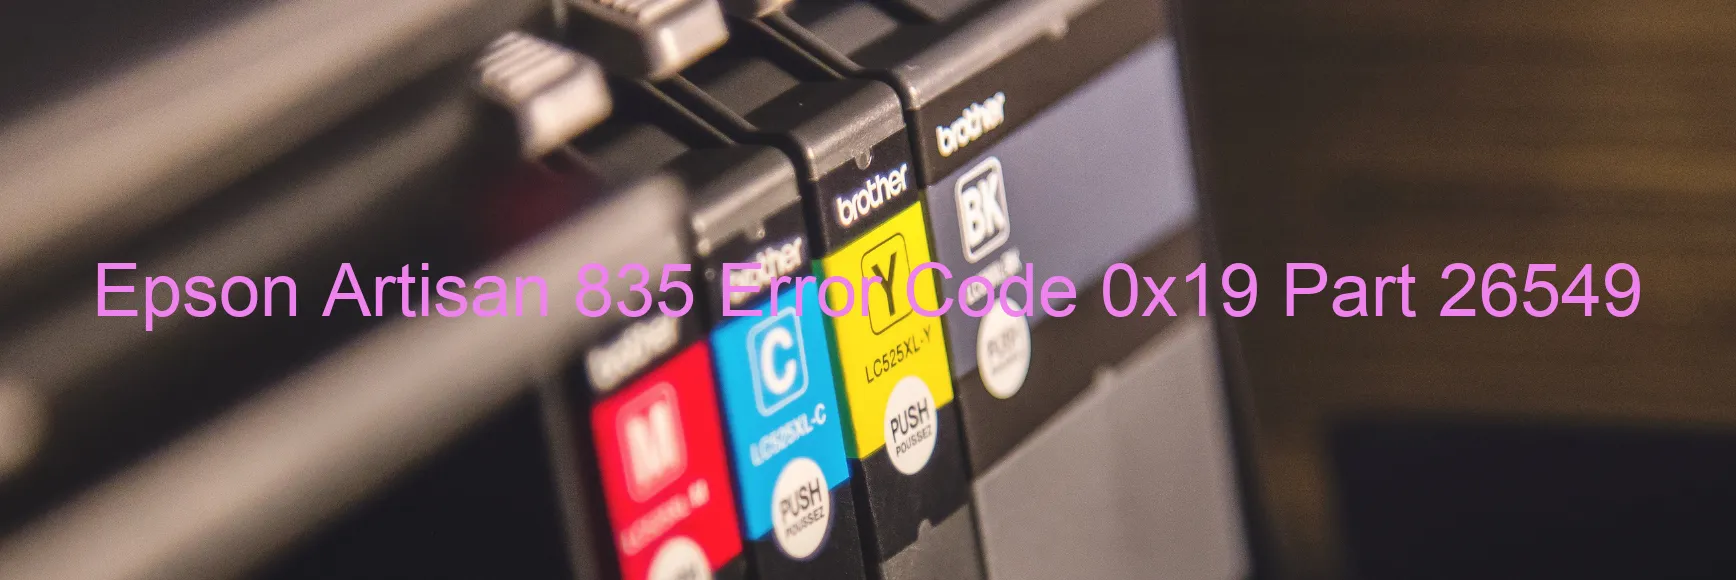 Epson Artisan 835 Error Code 0x19 Part 26549